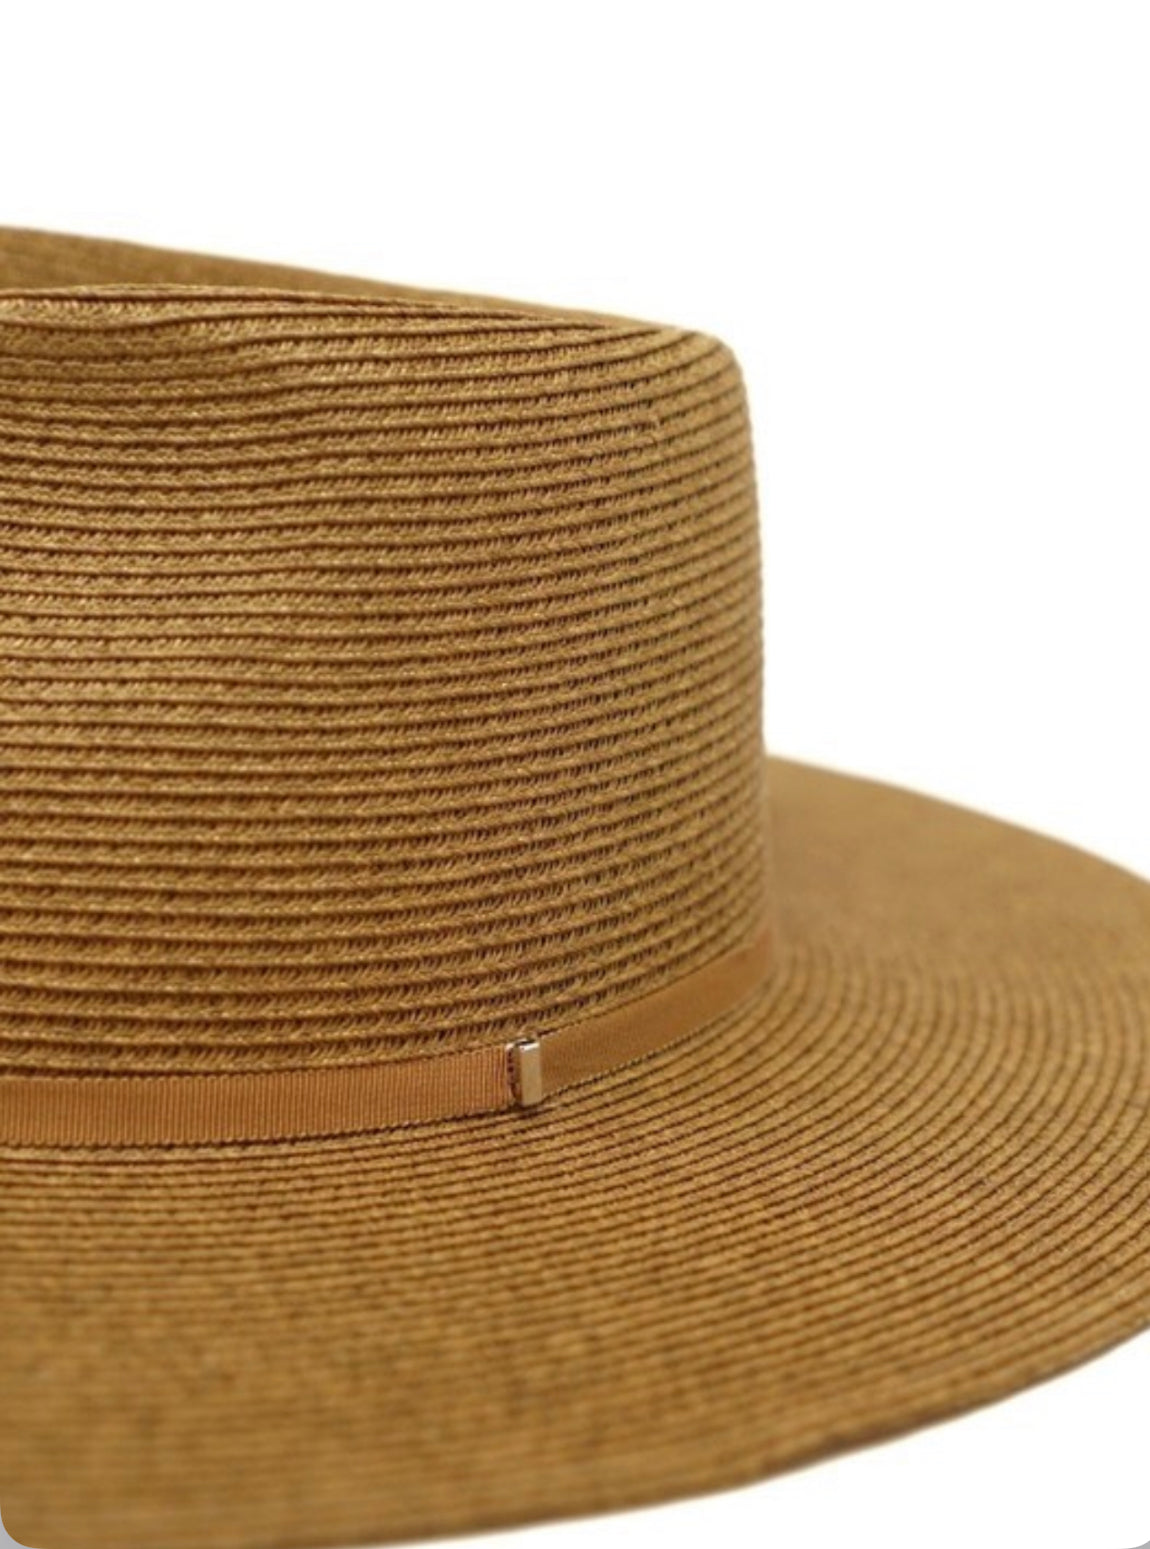 koba rancher straw hat women's fashion accessory